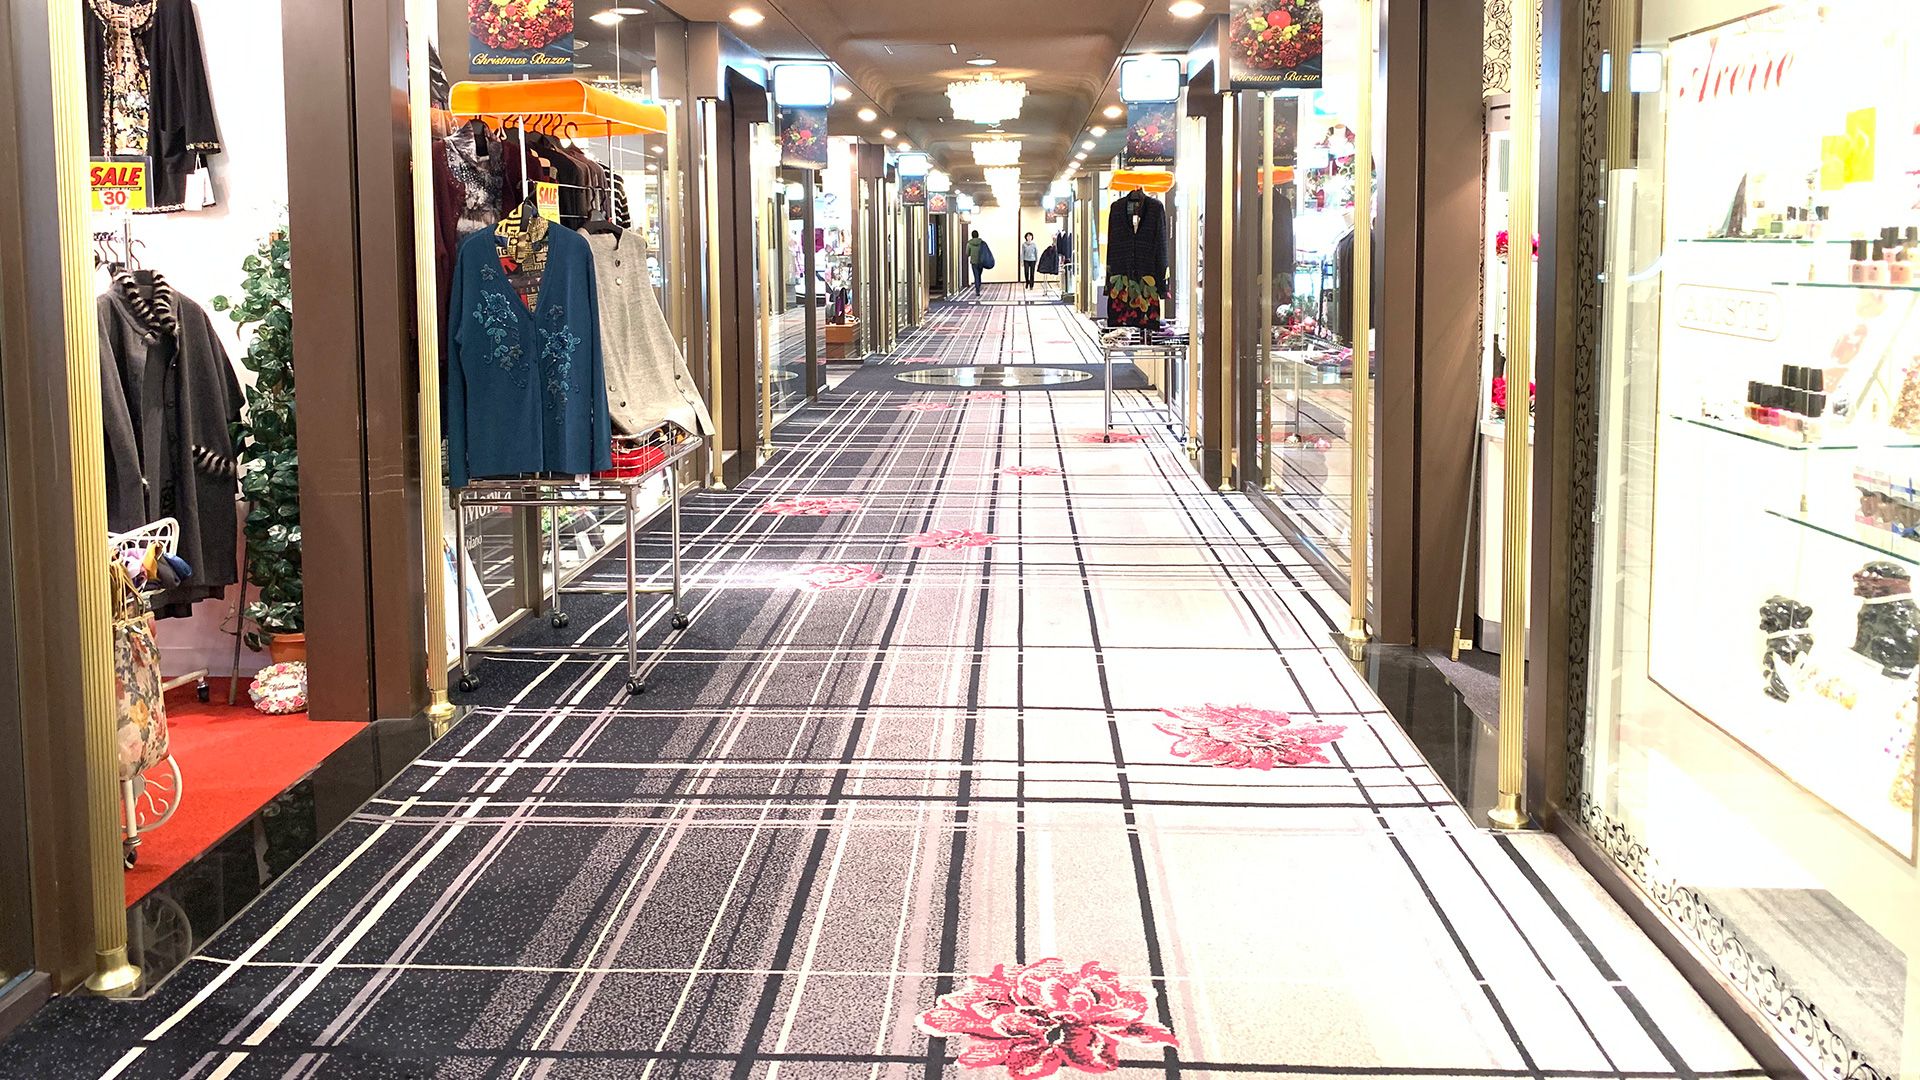 The Main Shopping Arcade